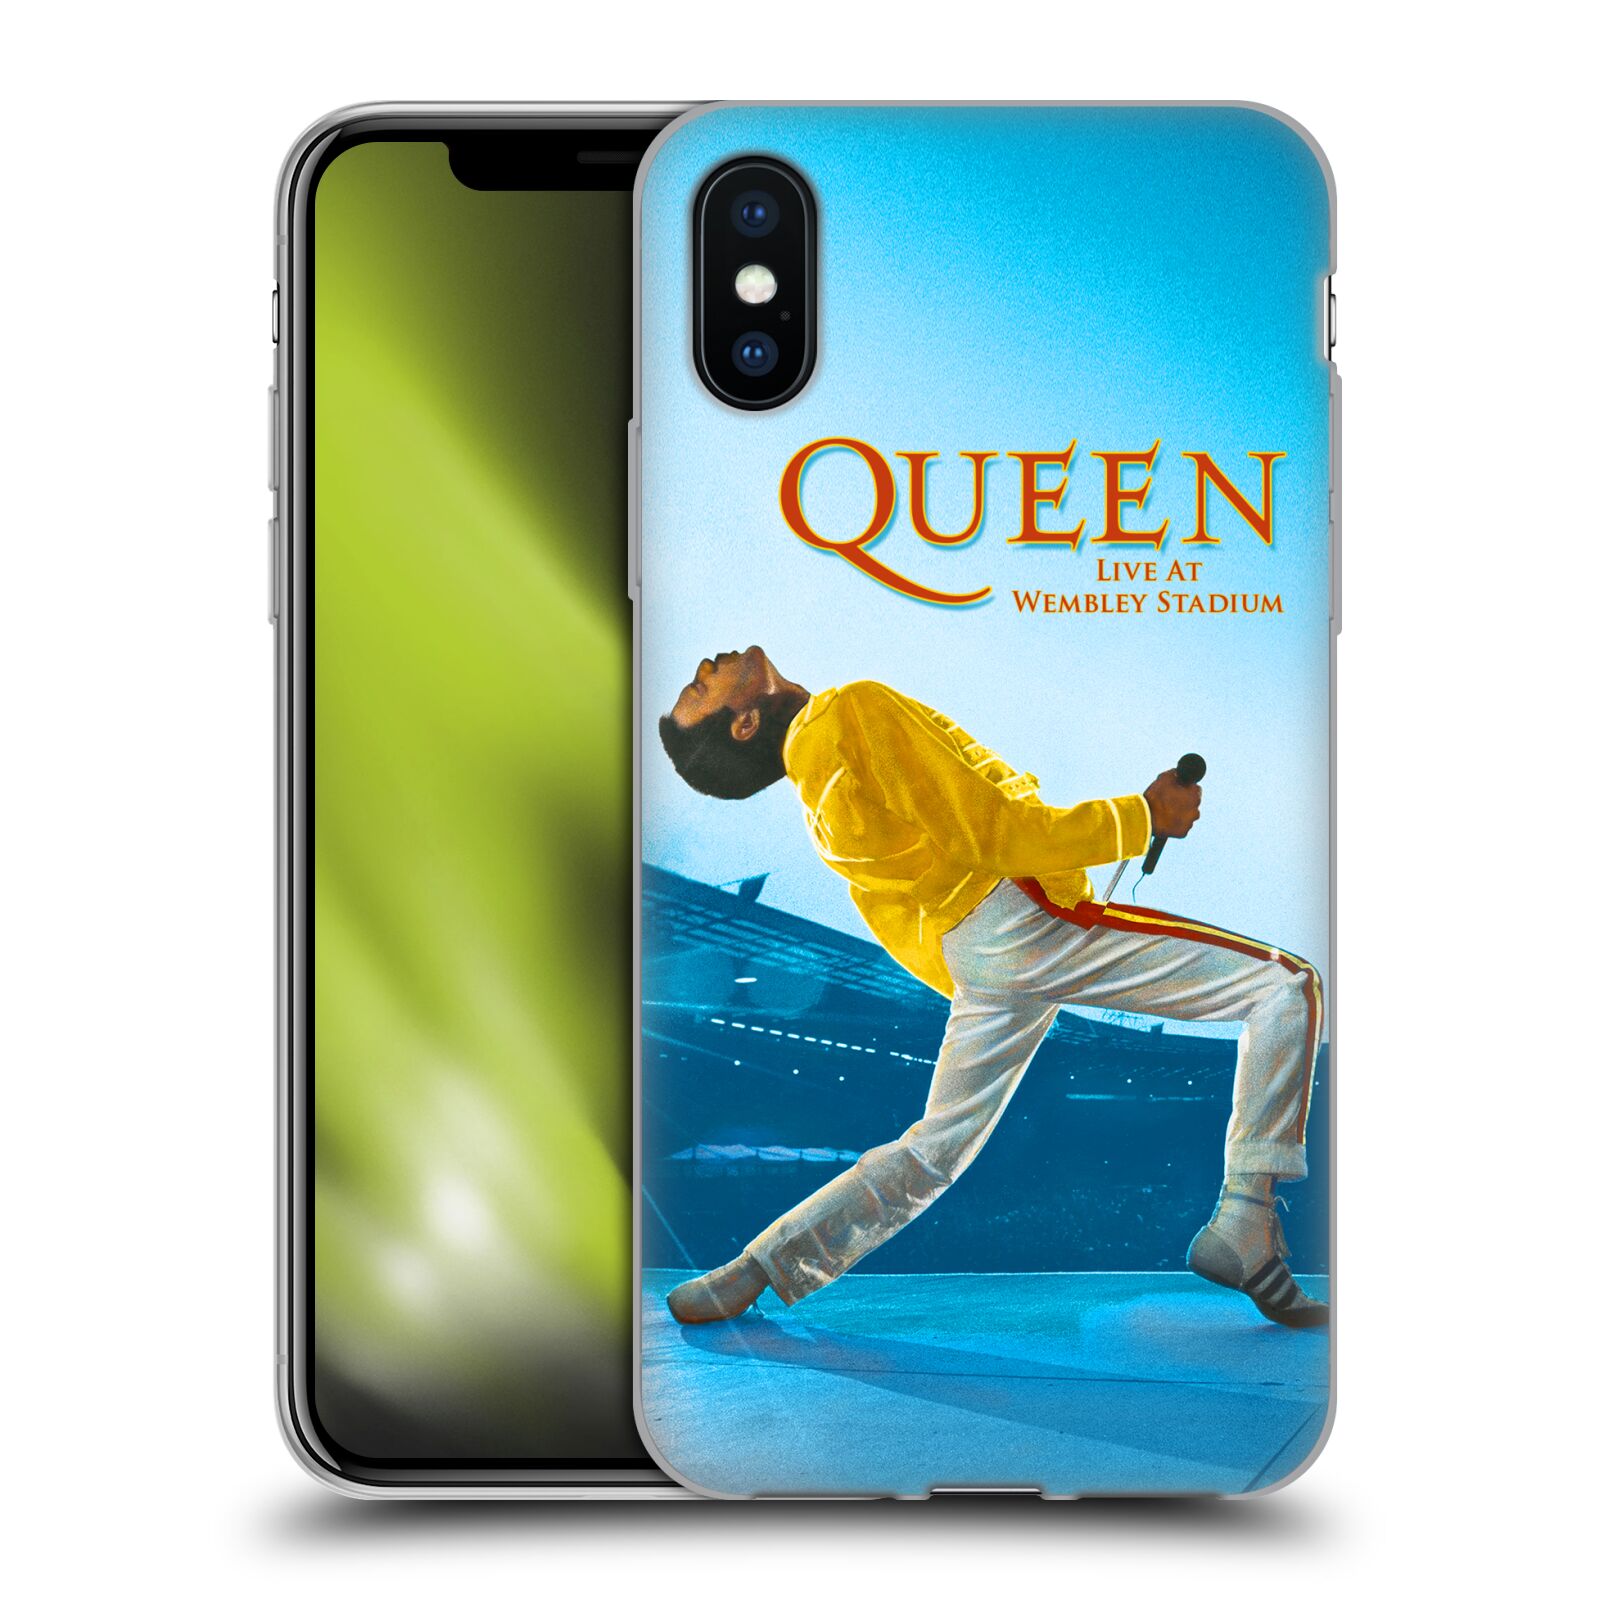 HEAD CASE silikonový obal na mobil Apple Iphone X zpěvák Queen skupina Freddie Mercury